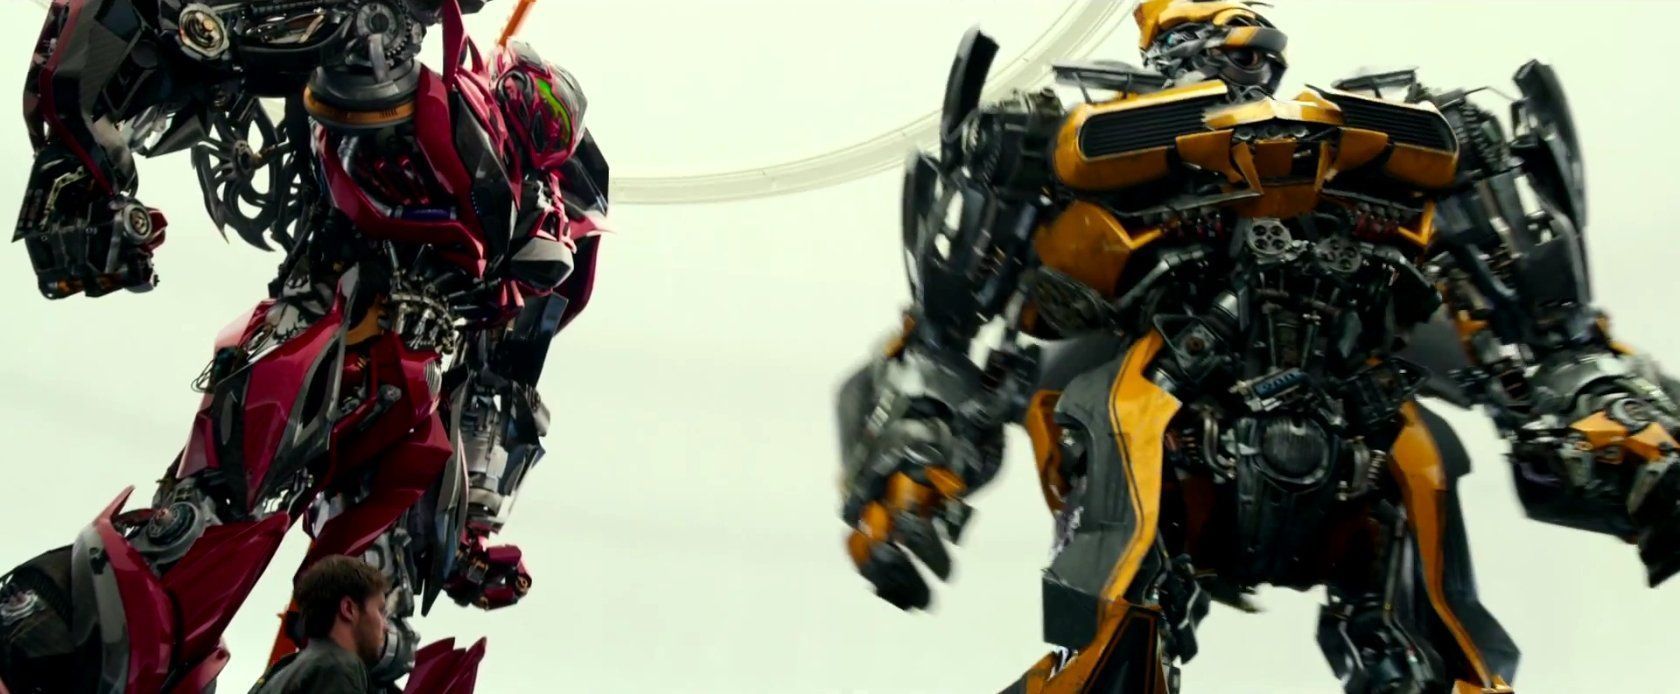 Transformers 4 : la Bande Annonce + 4 affiches exclusives #11